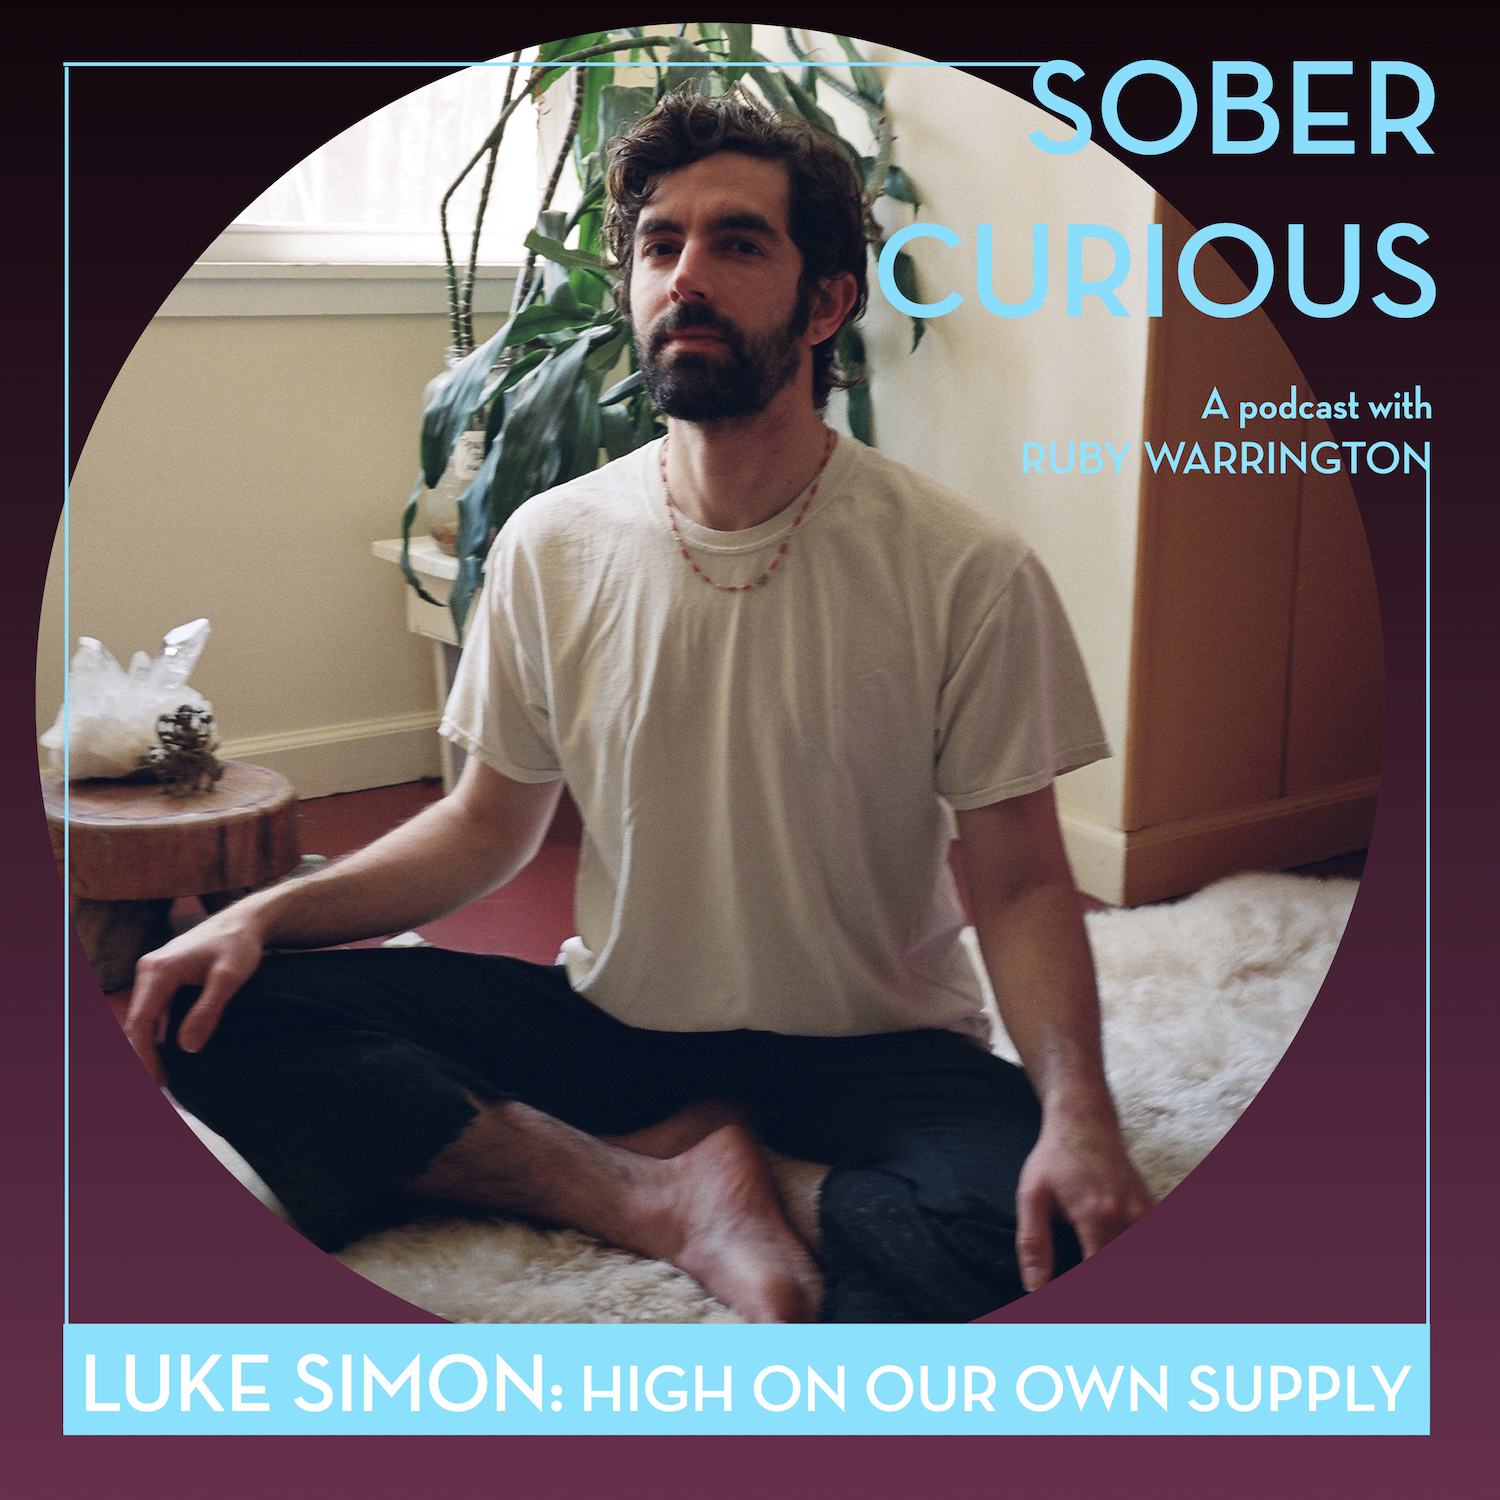 Luke Simon venus juice sober curious podcast ruby warrington